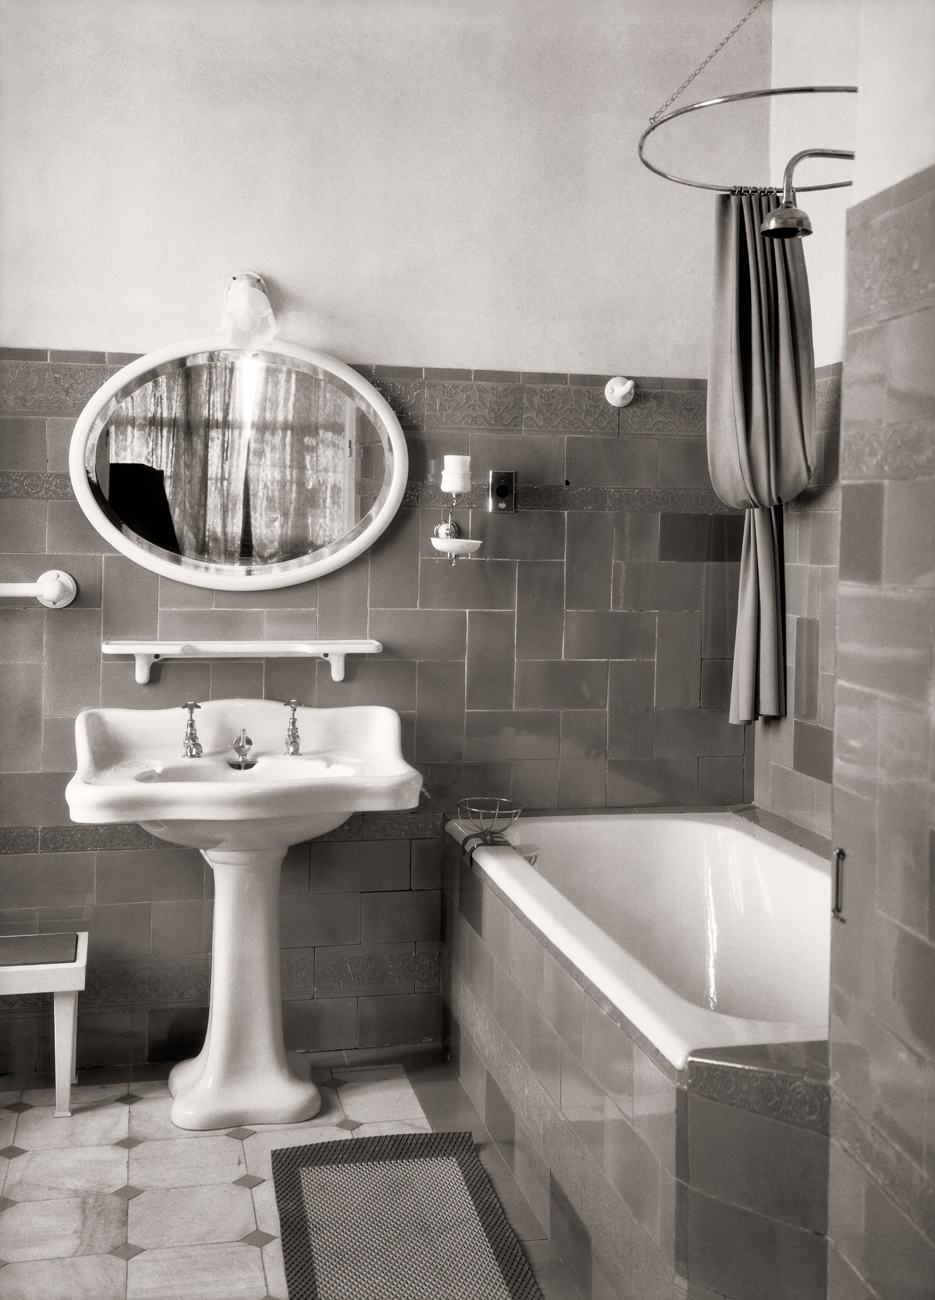 Cuarto de baño del Pabellón Otero. Residencia destinada al Alto Comisario. Ceuta, 1929<br/>Gelatina de plata / Silver gelatin